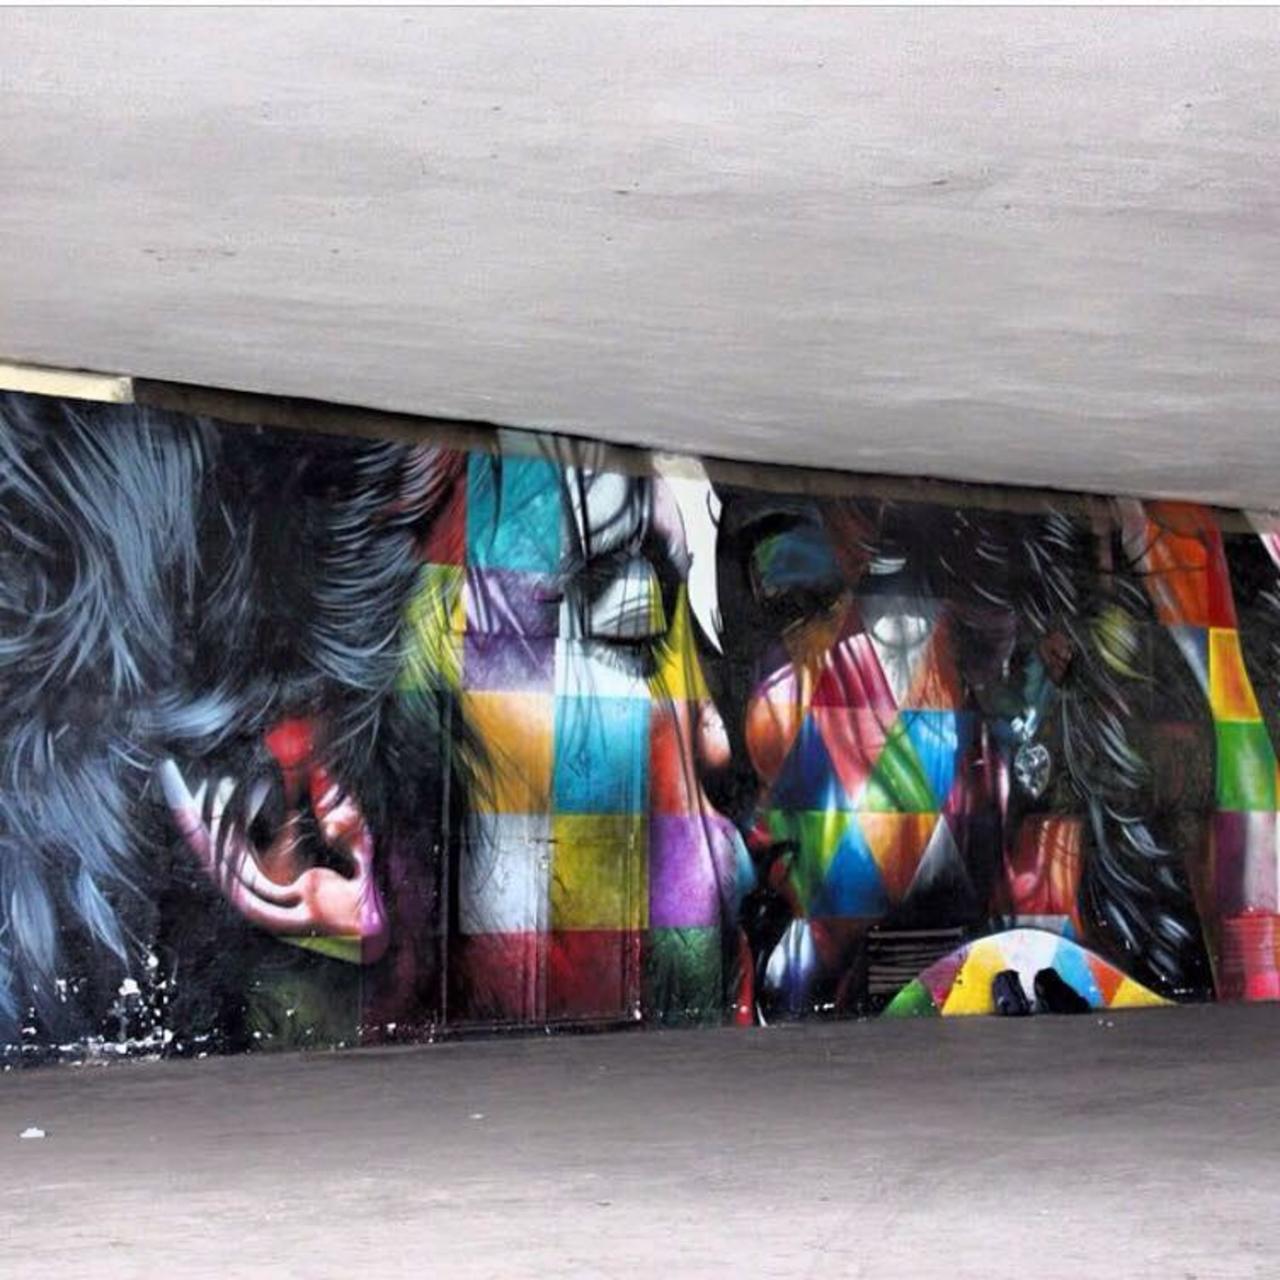 New Street Art by the brilliant Eduardo Kobra 

#art #mural #graffiti #streetart http://t.co/pDvejgui7t